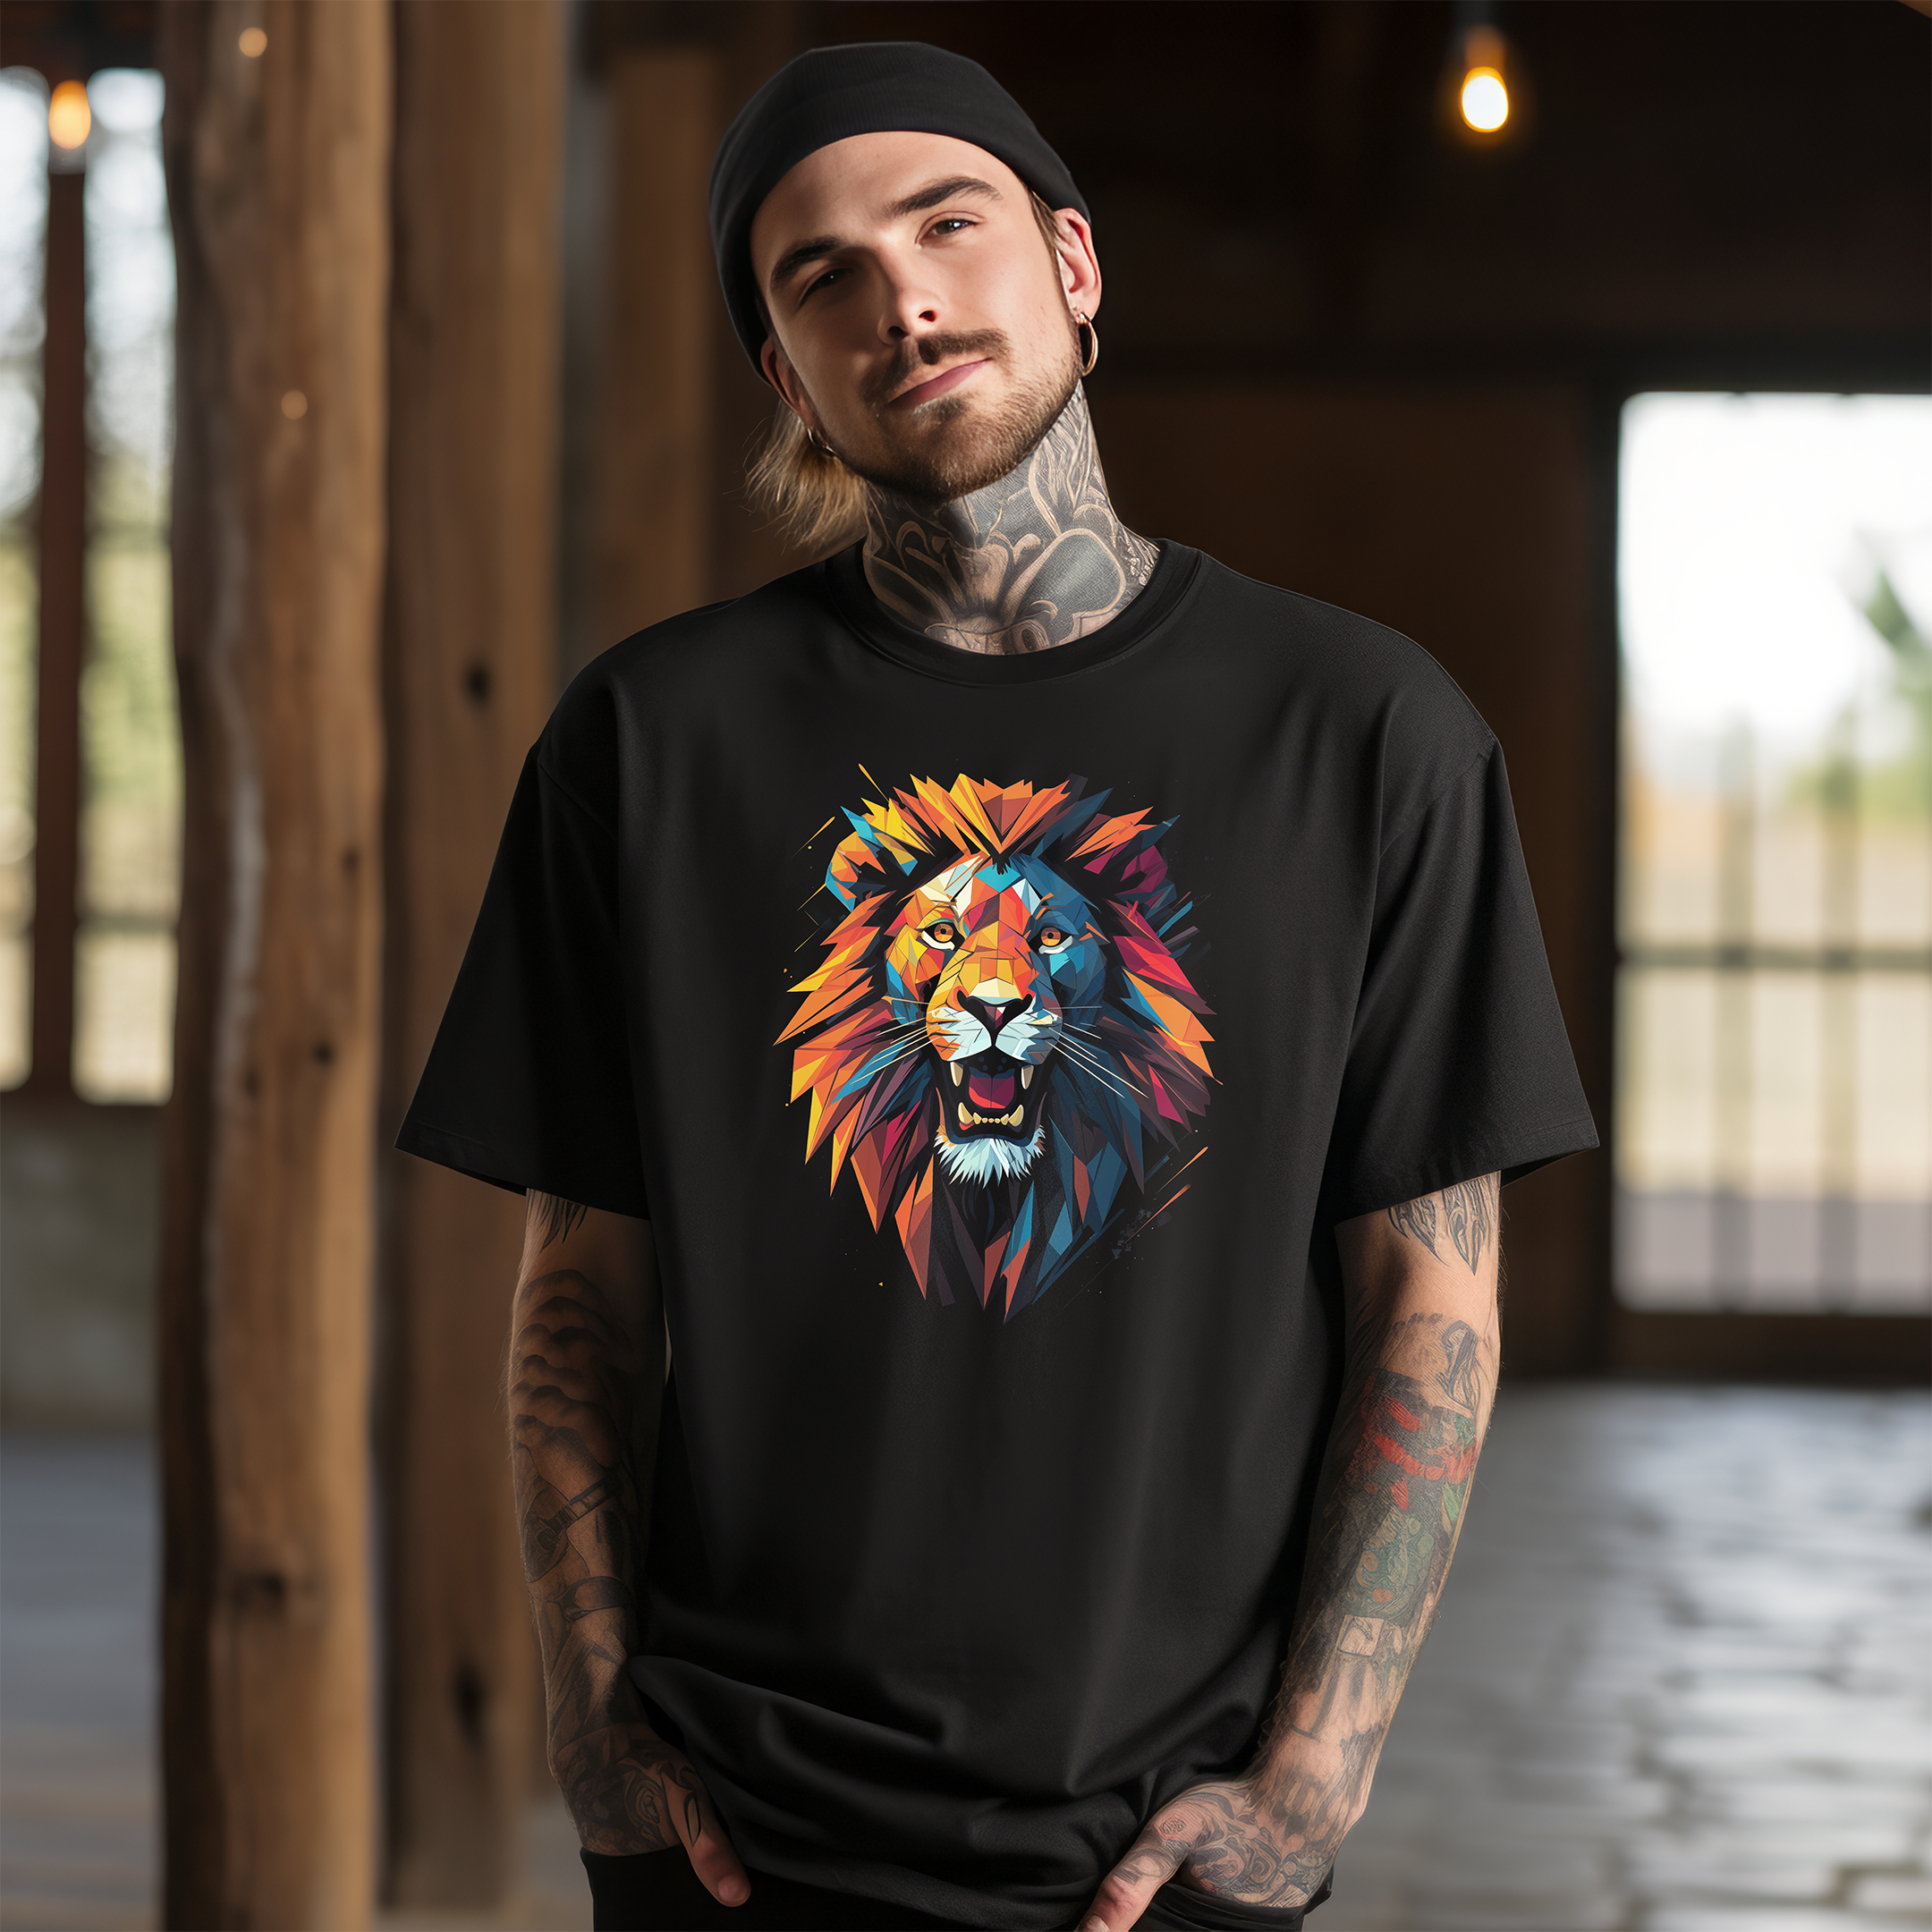 Vibrant Lion Art Tee – Unisex Stylish Graphic Shirt